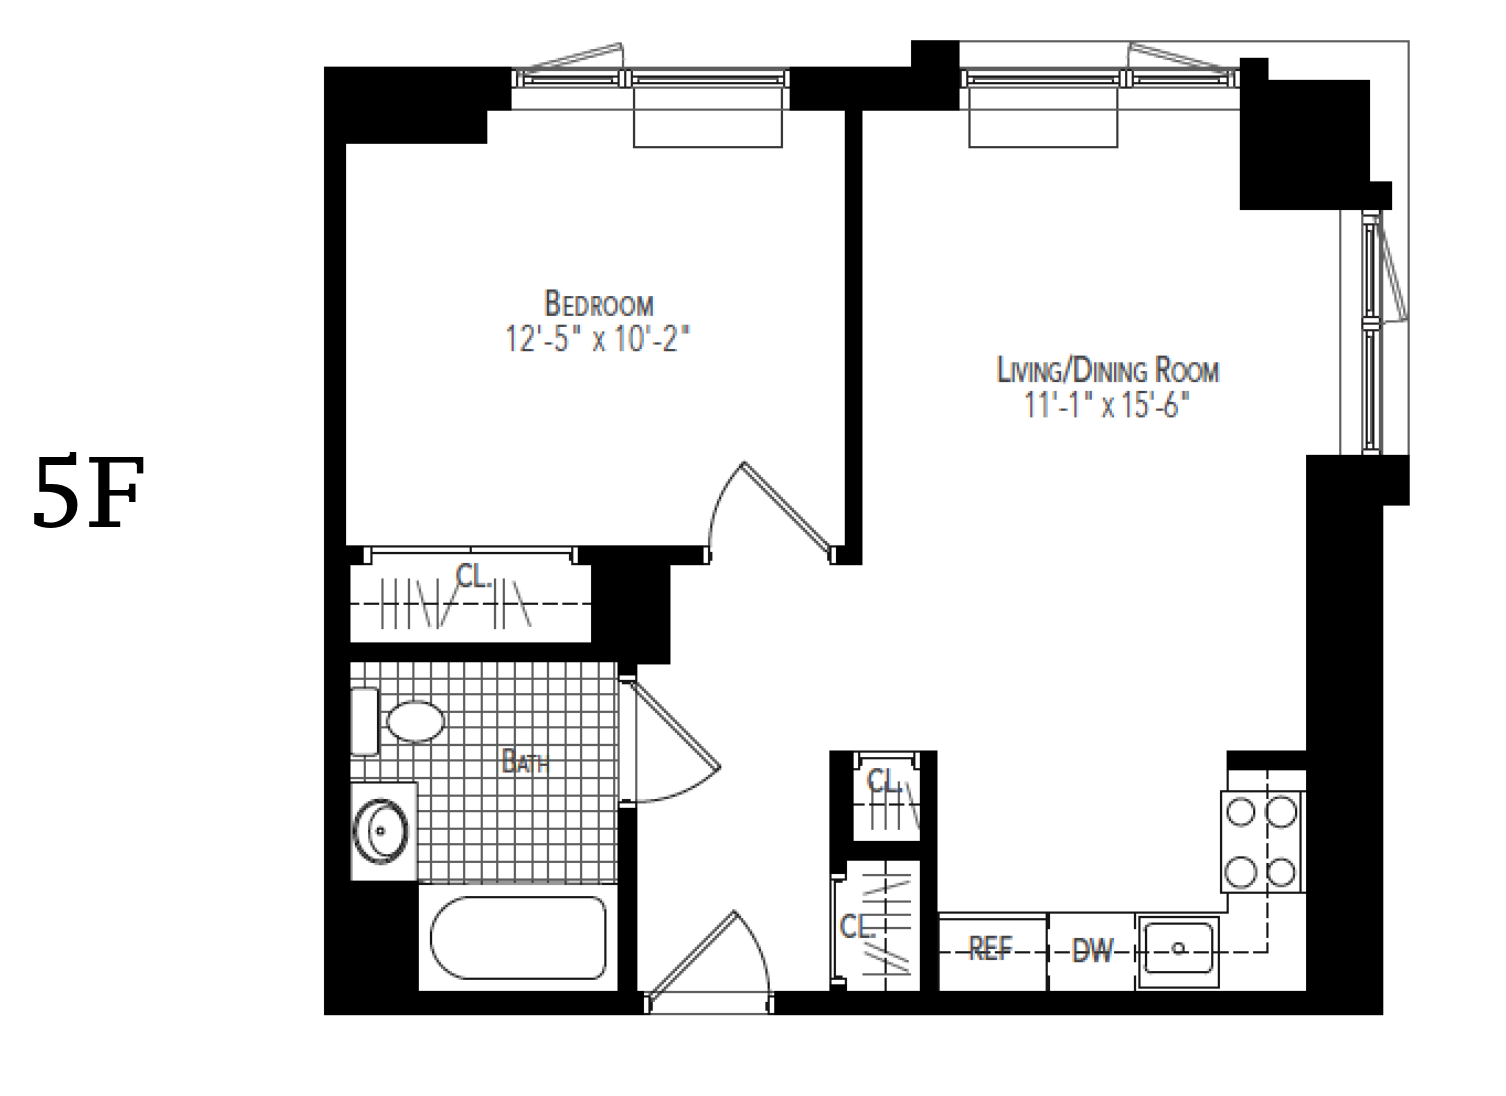 Floorplan for 185 Ave B, 5F